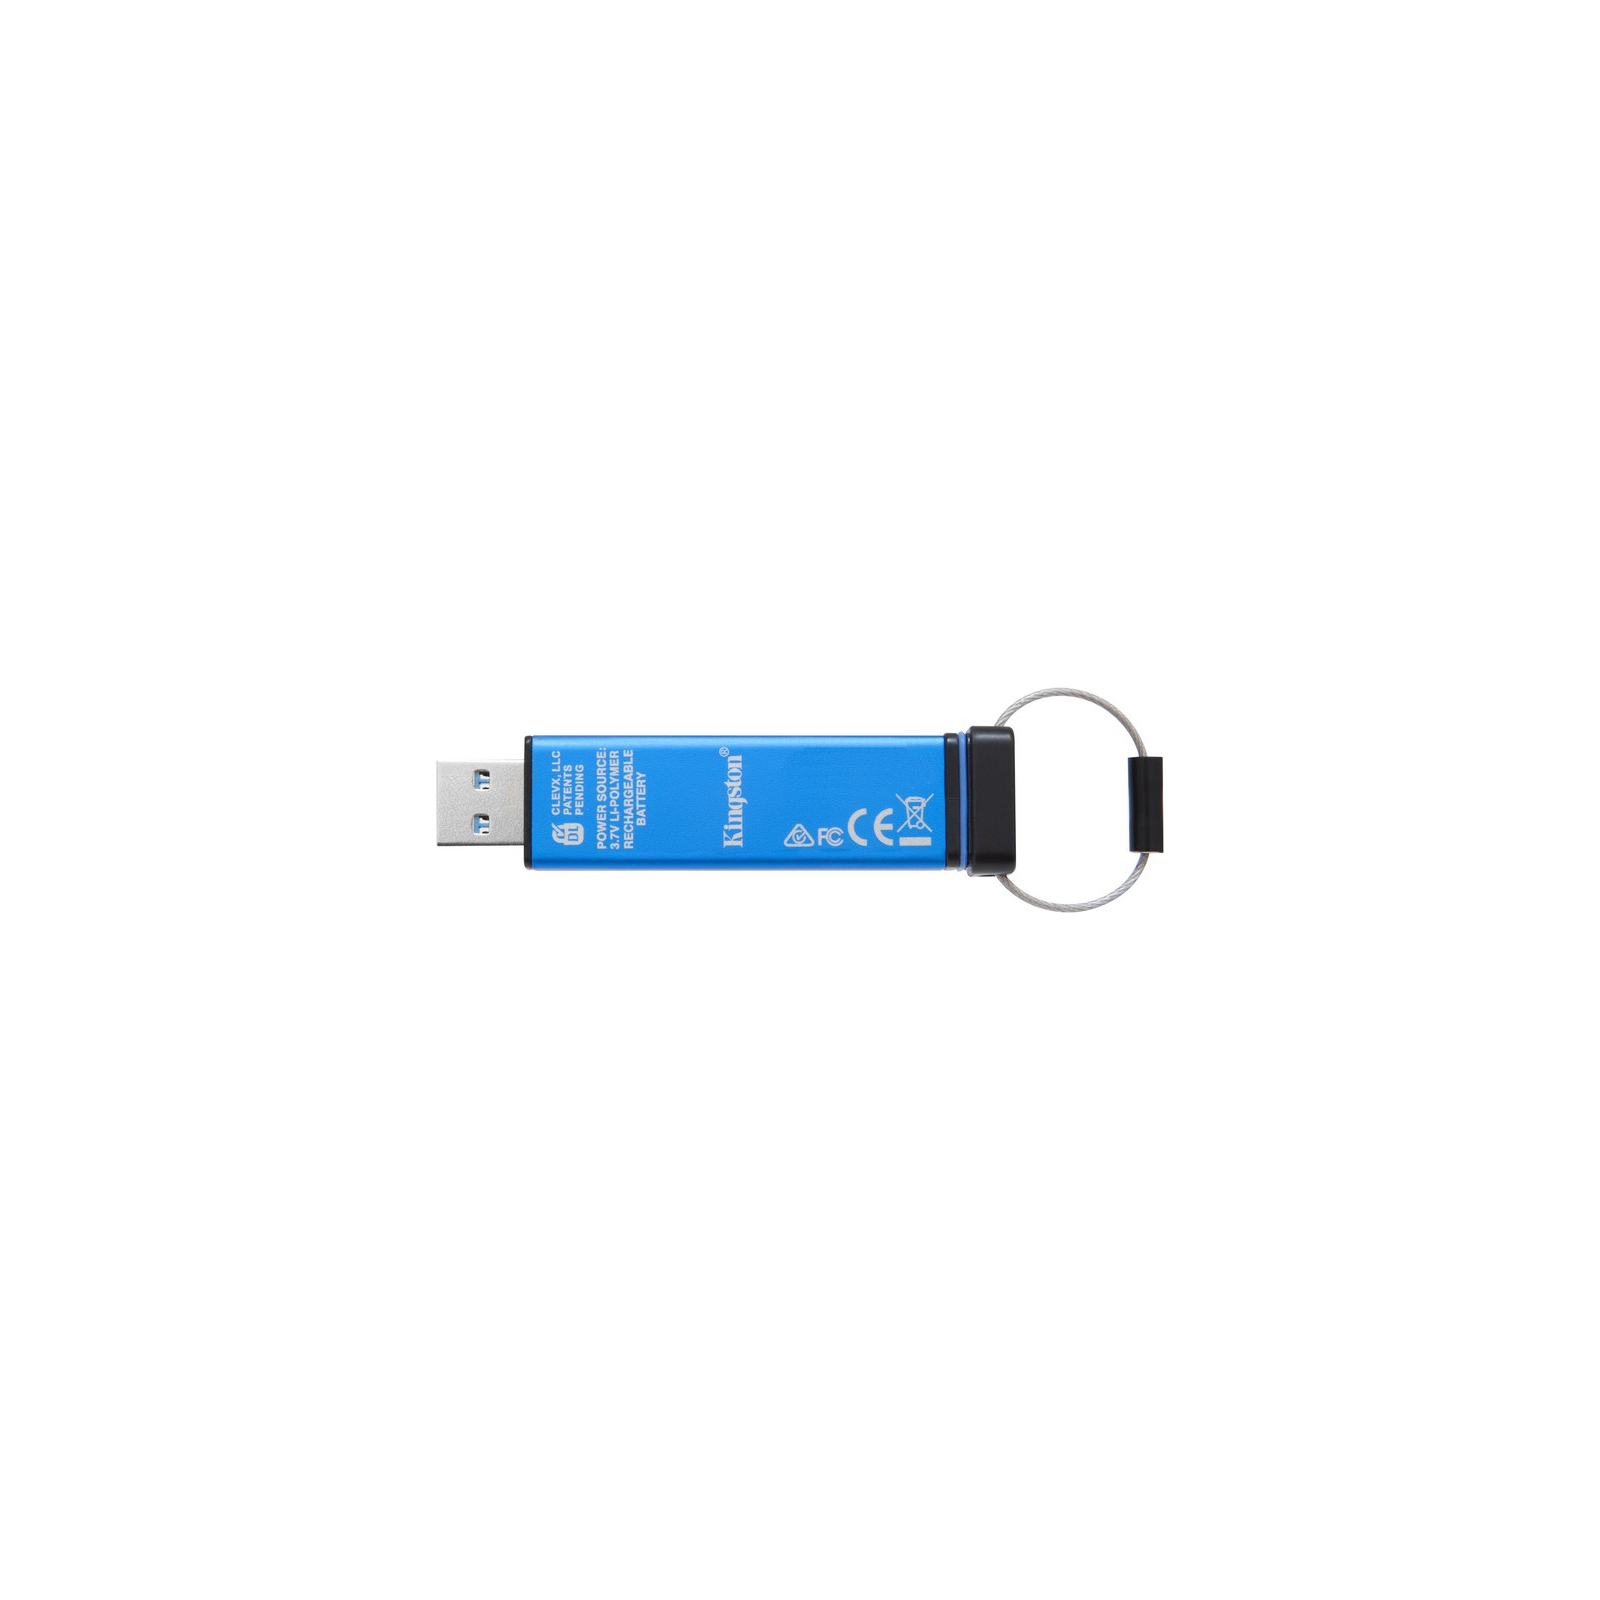 USB флеш накопитель Kingston 64GB DT 2000 Metal Security USB 3.0 (DT2000/64GB) изображение 3